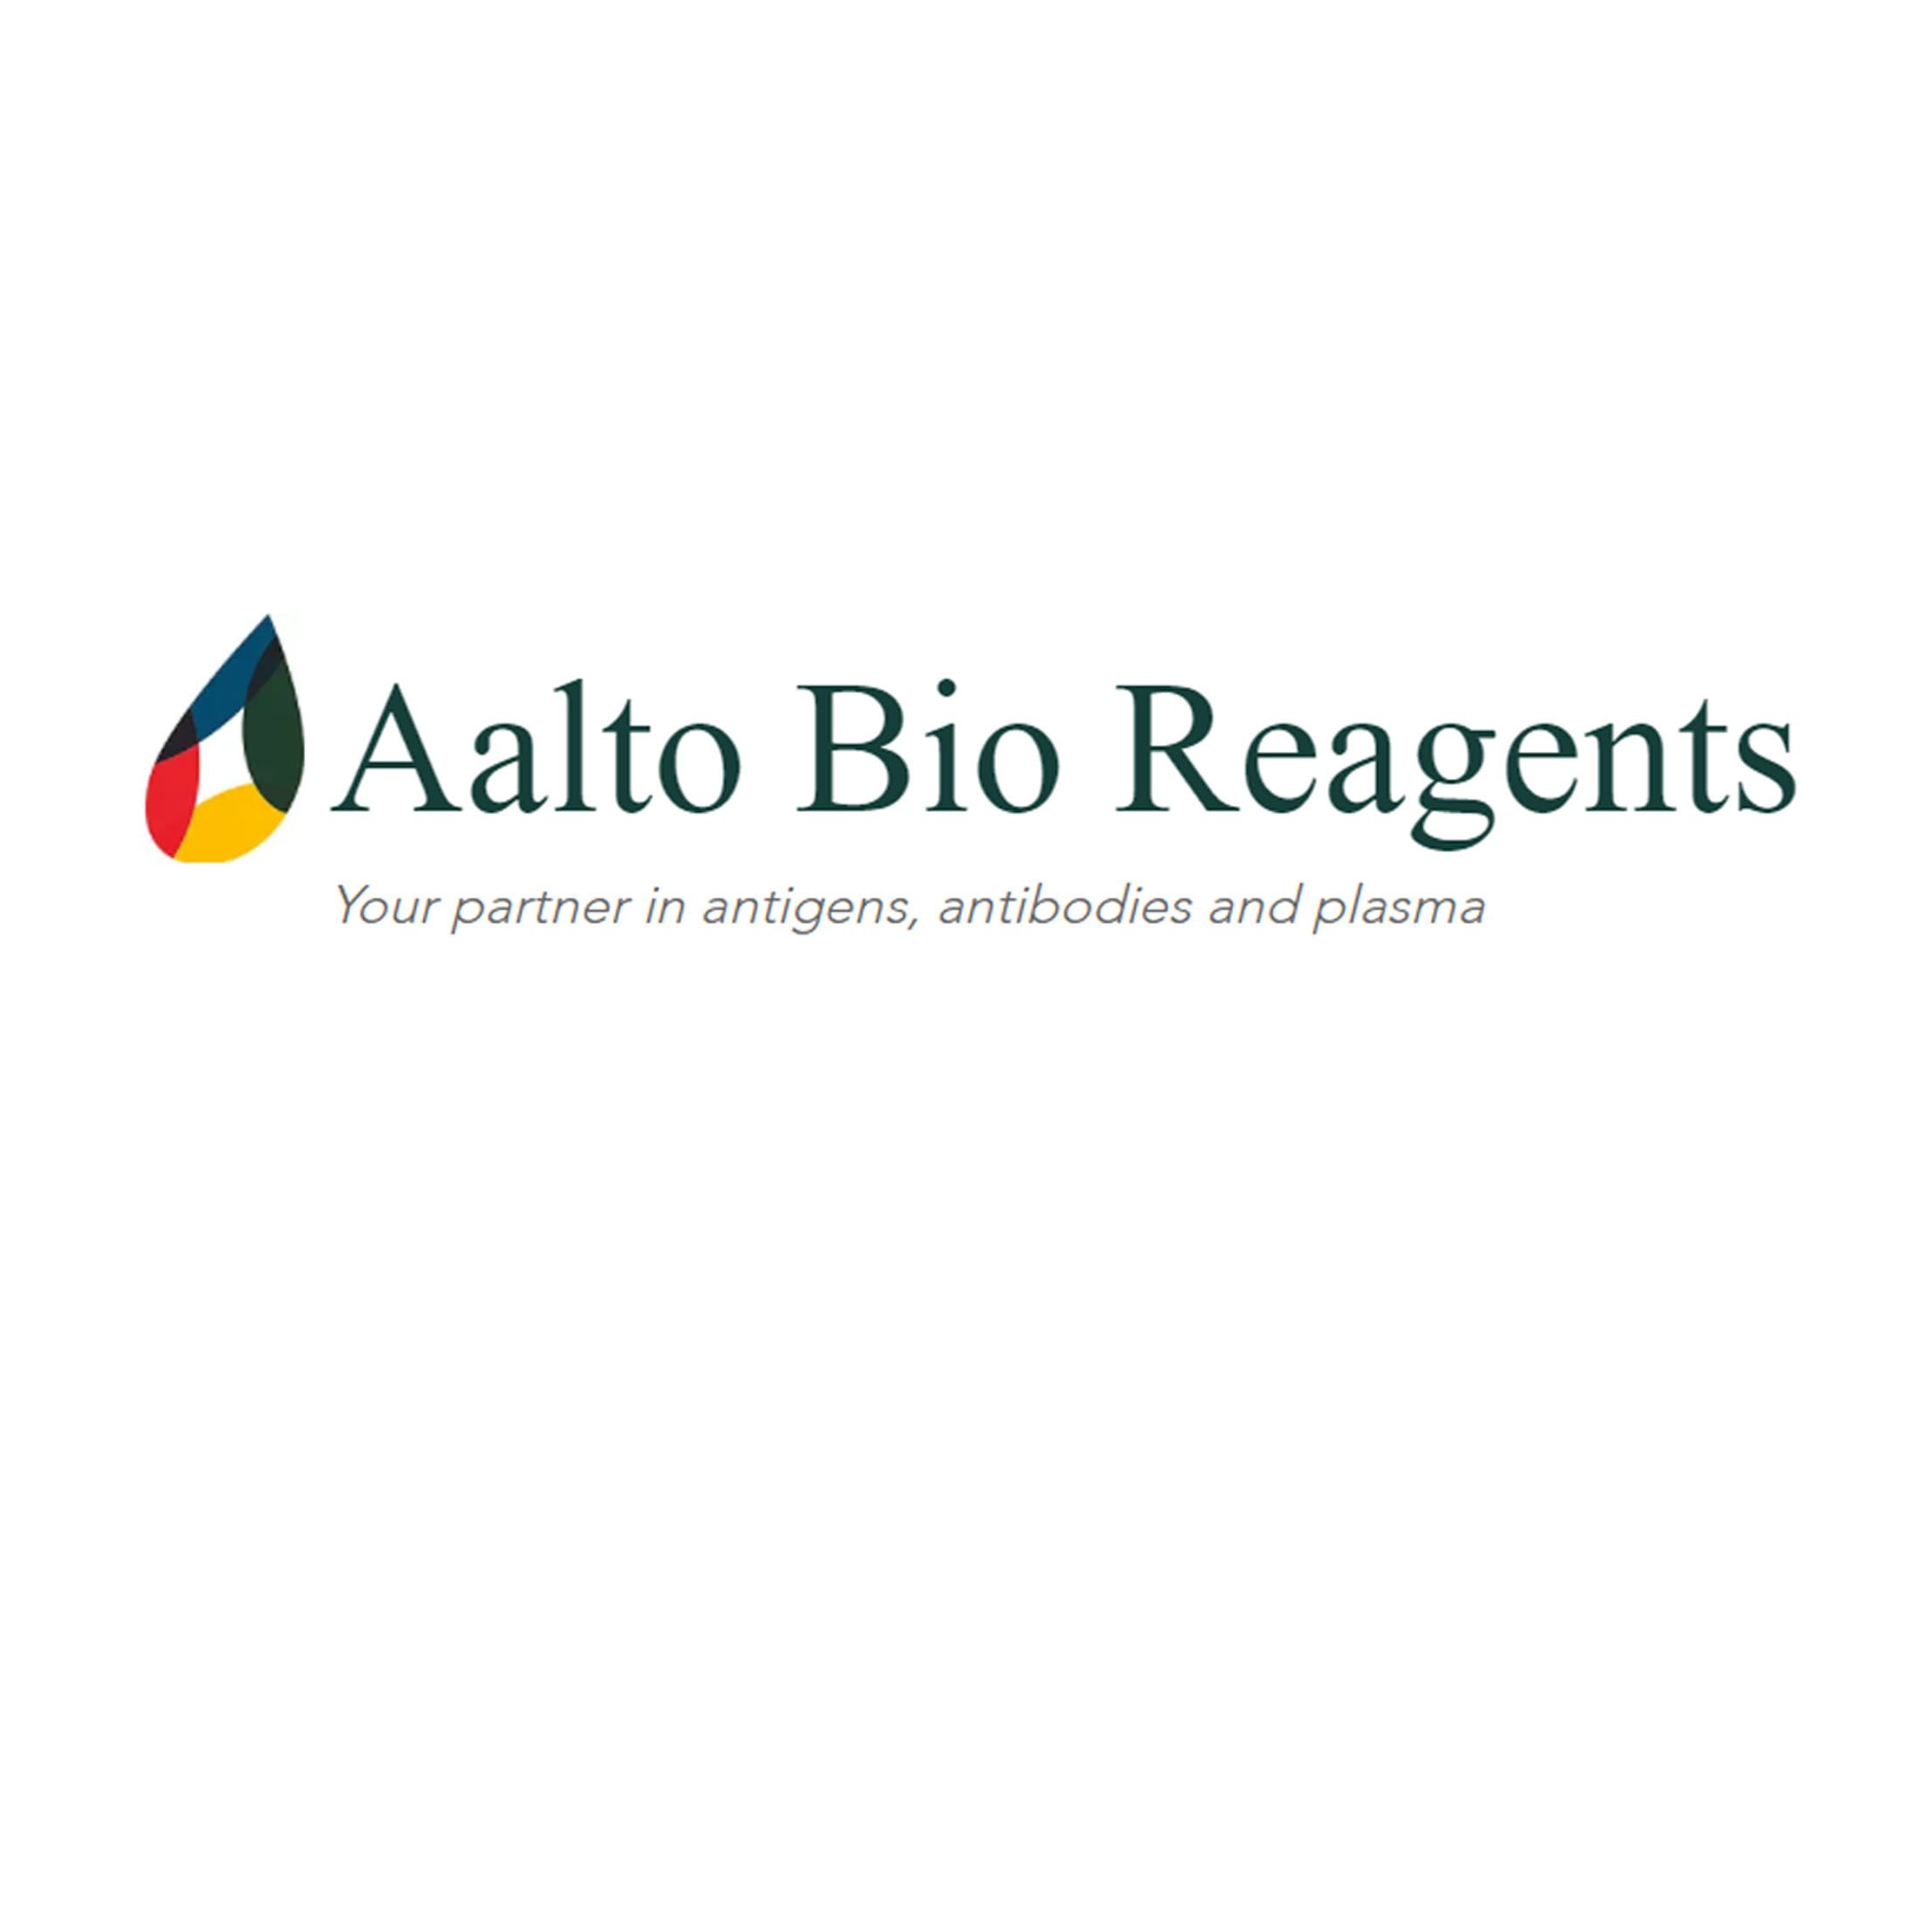 Aalto Bio Reagents抗原、抗体和疾病状态血浆